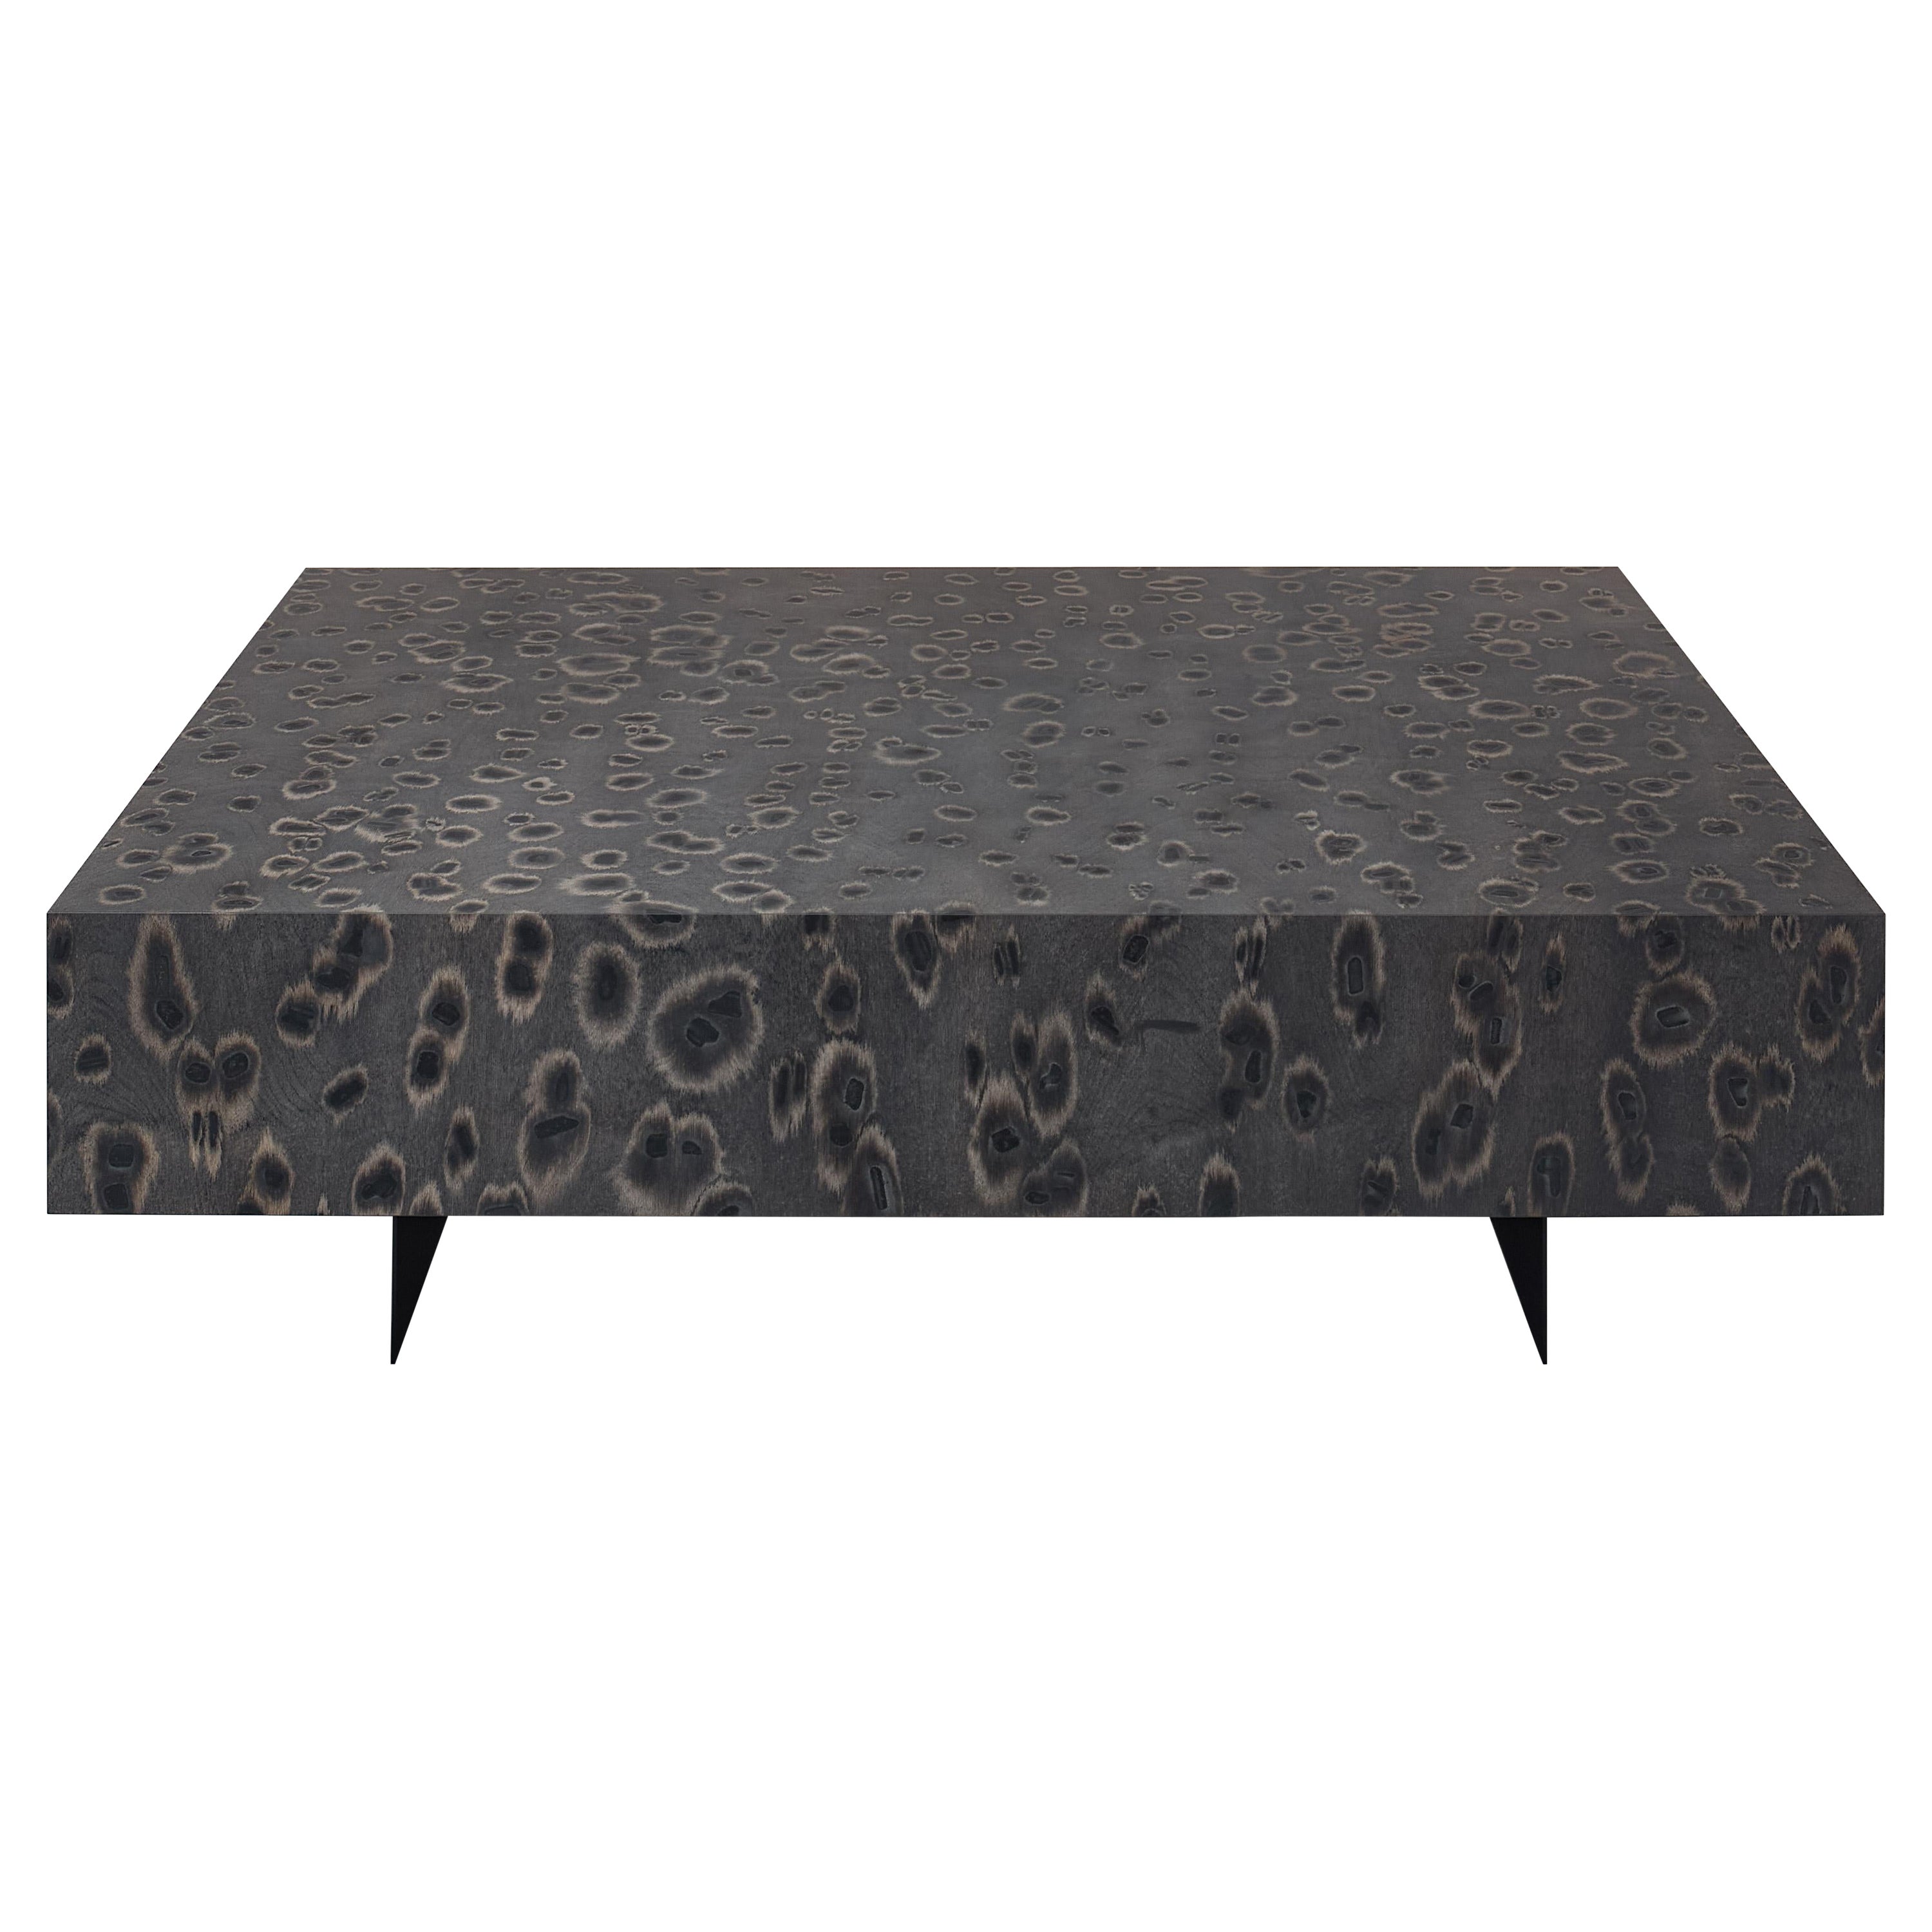 Osis Block Quadrat Table by Llot Llov For Sale